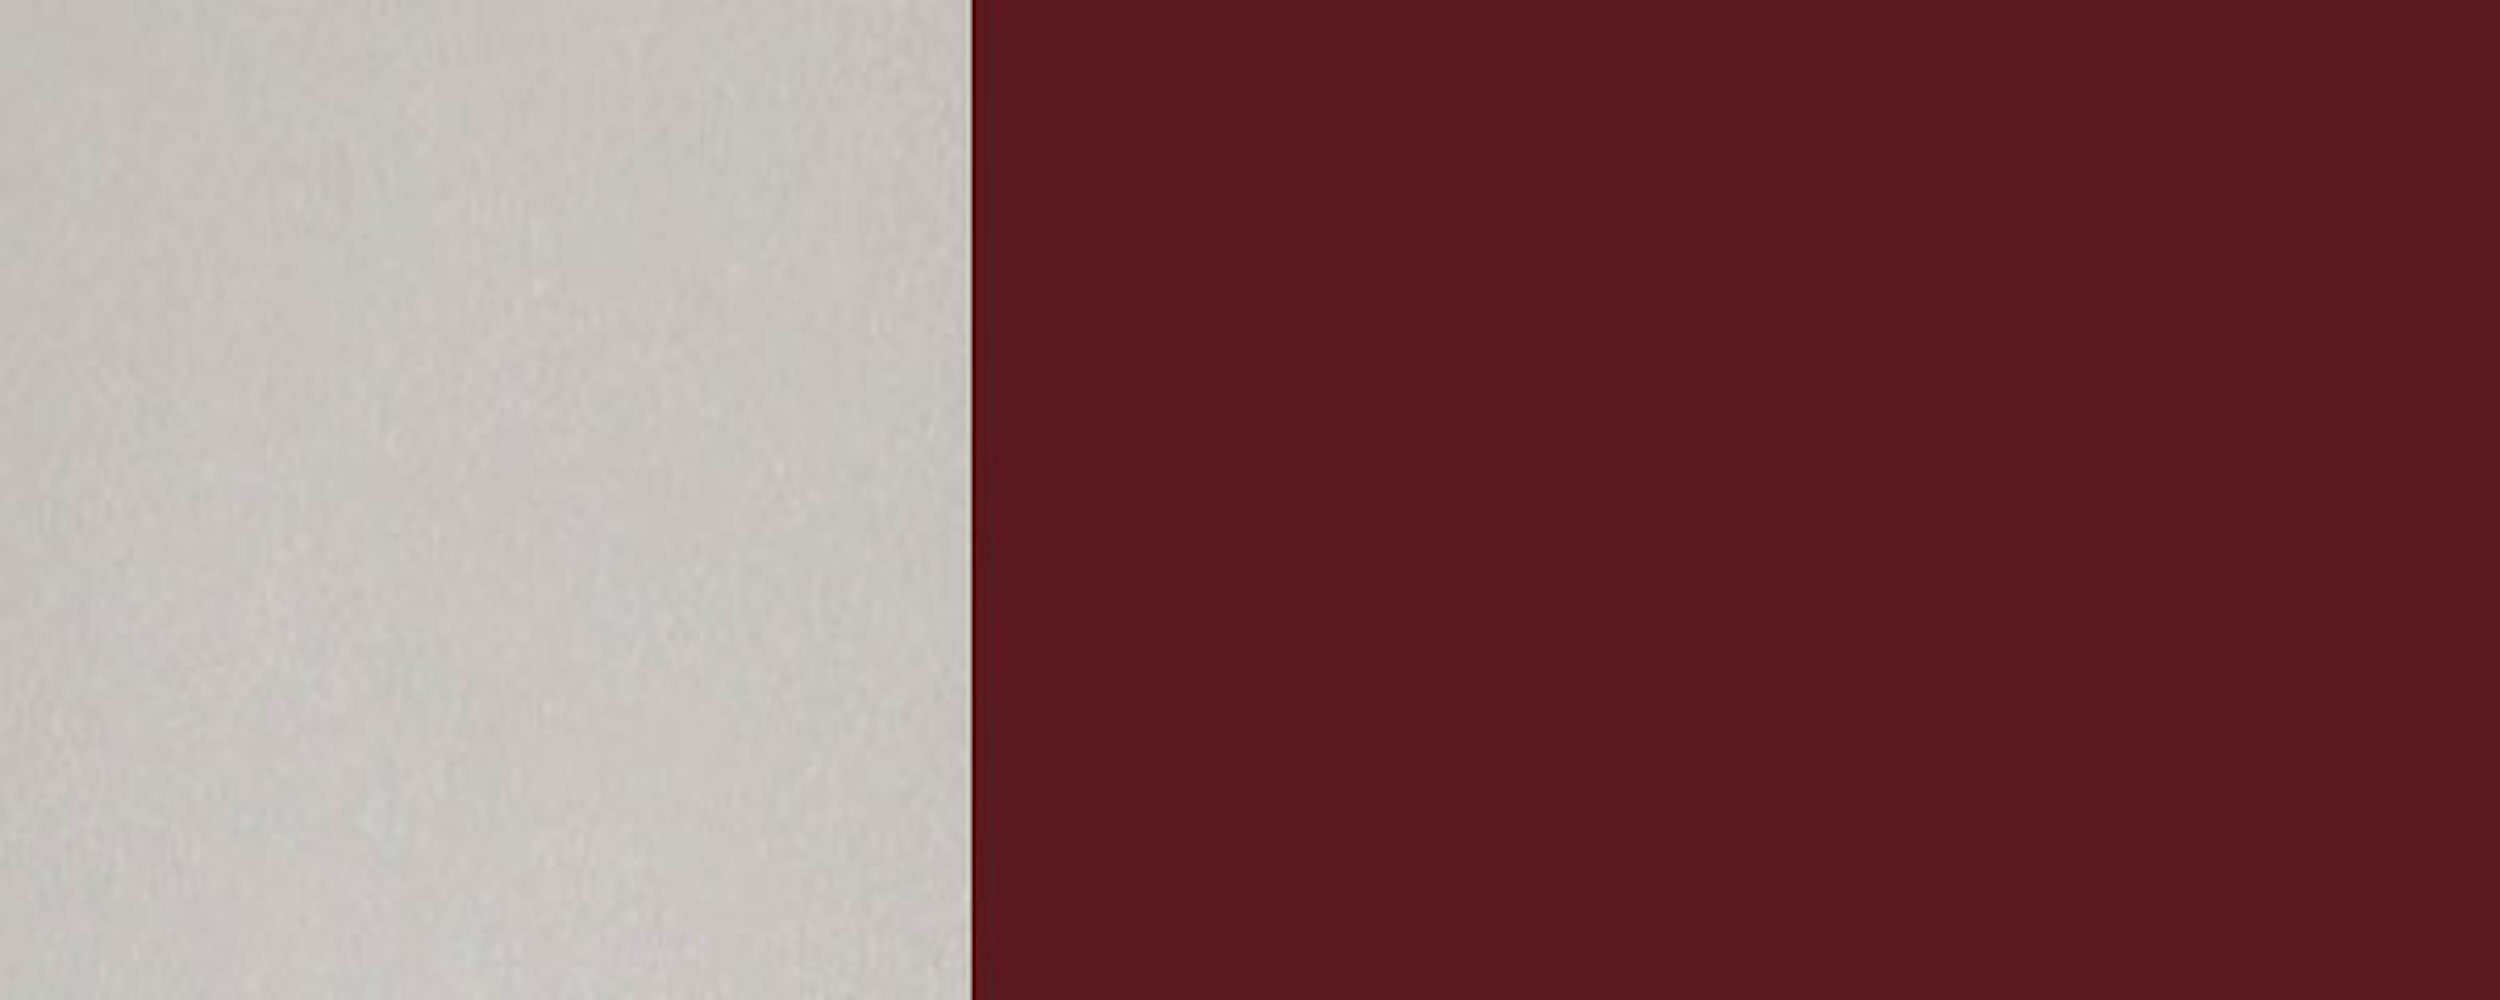 Feldmann-Wohnen Front- Unterschrank RAL (Teilauszug) (Tivoli) wählbar weinrot mit 3 3005 Korpusfarbe Schubladen & matt 80cm Tivoli